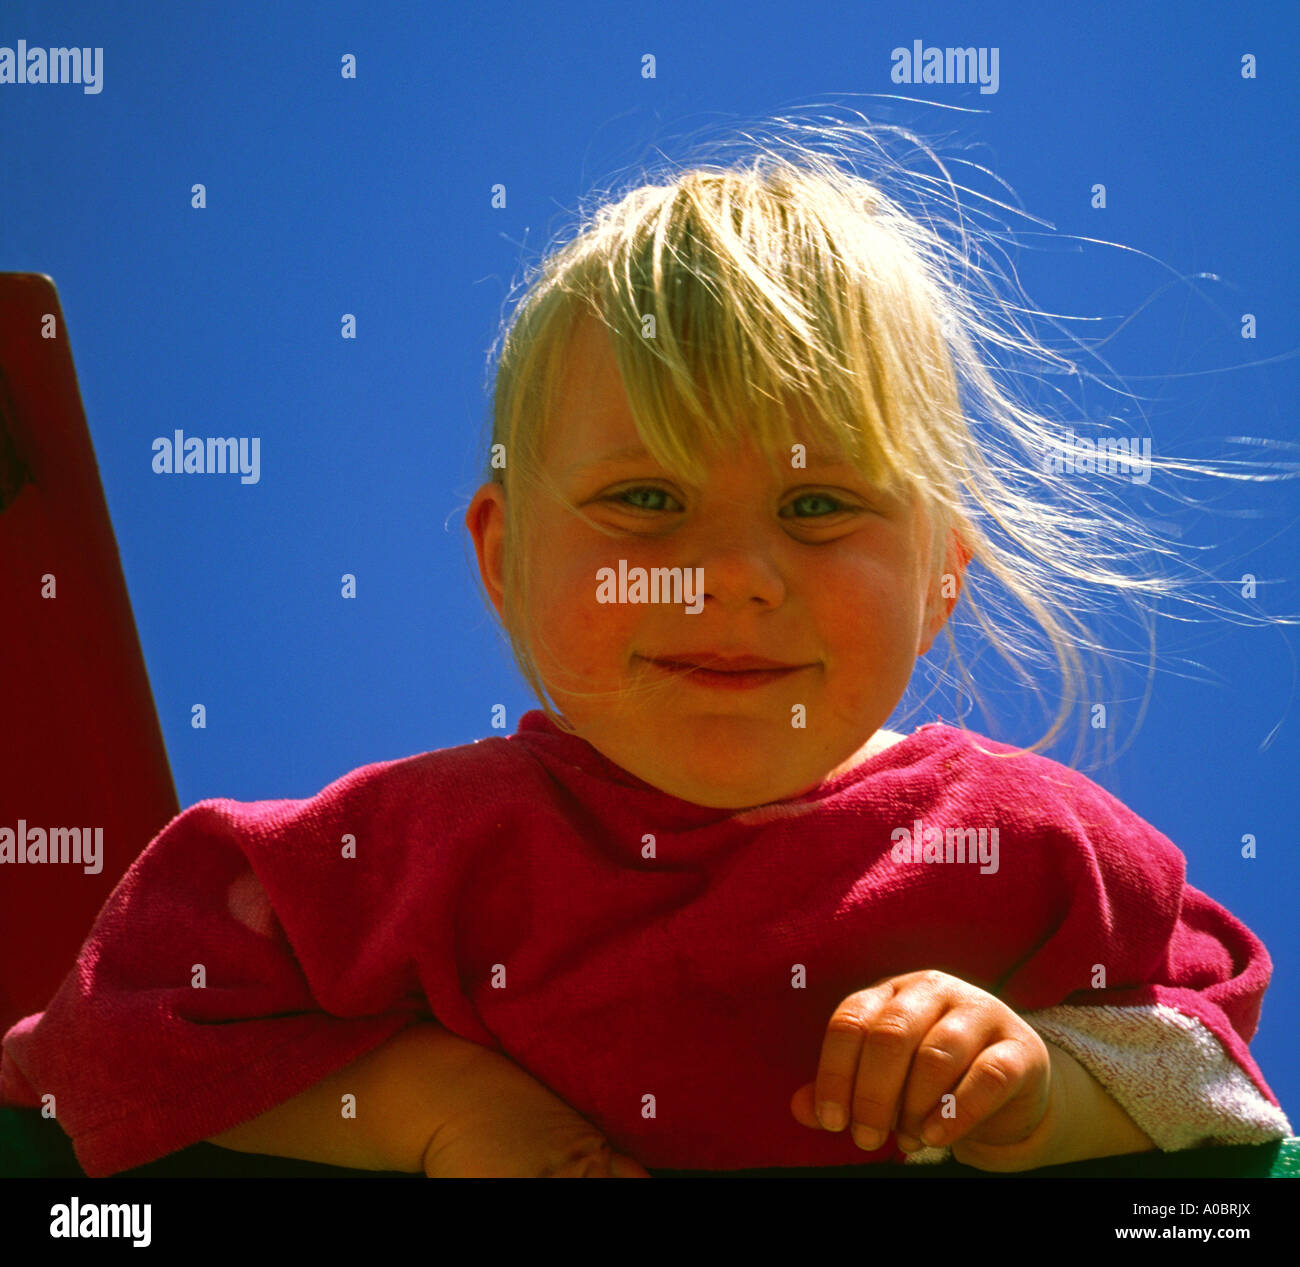 Bambina nel vento Foto stock - Alamy